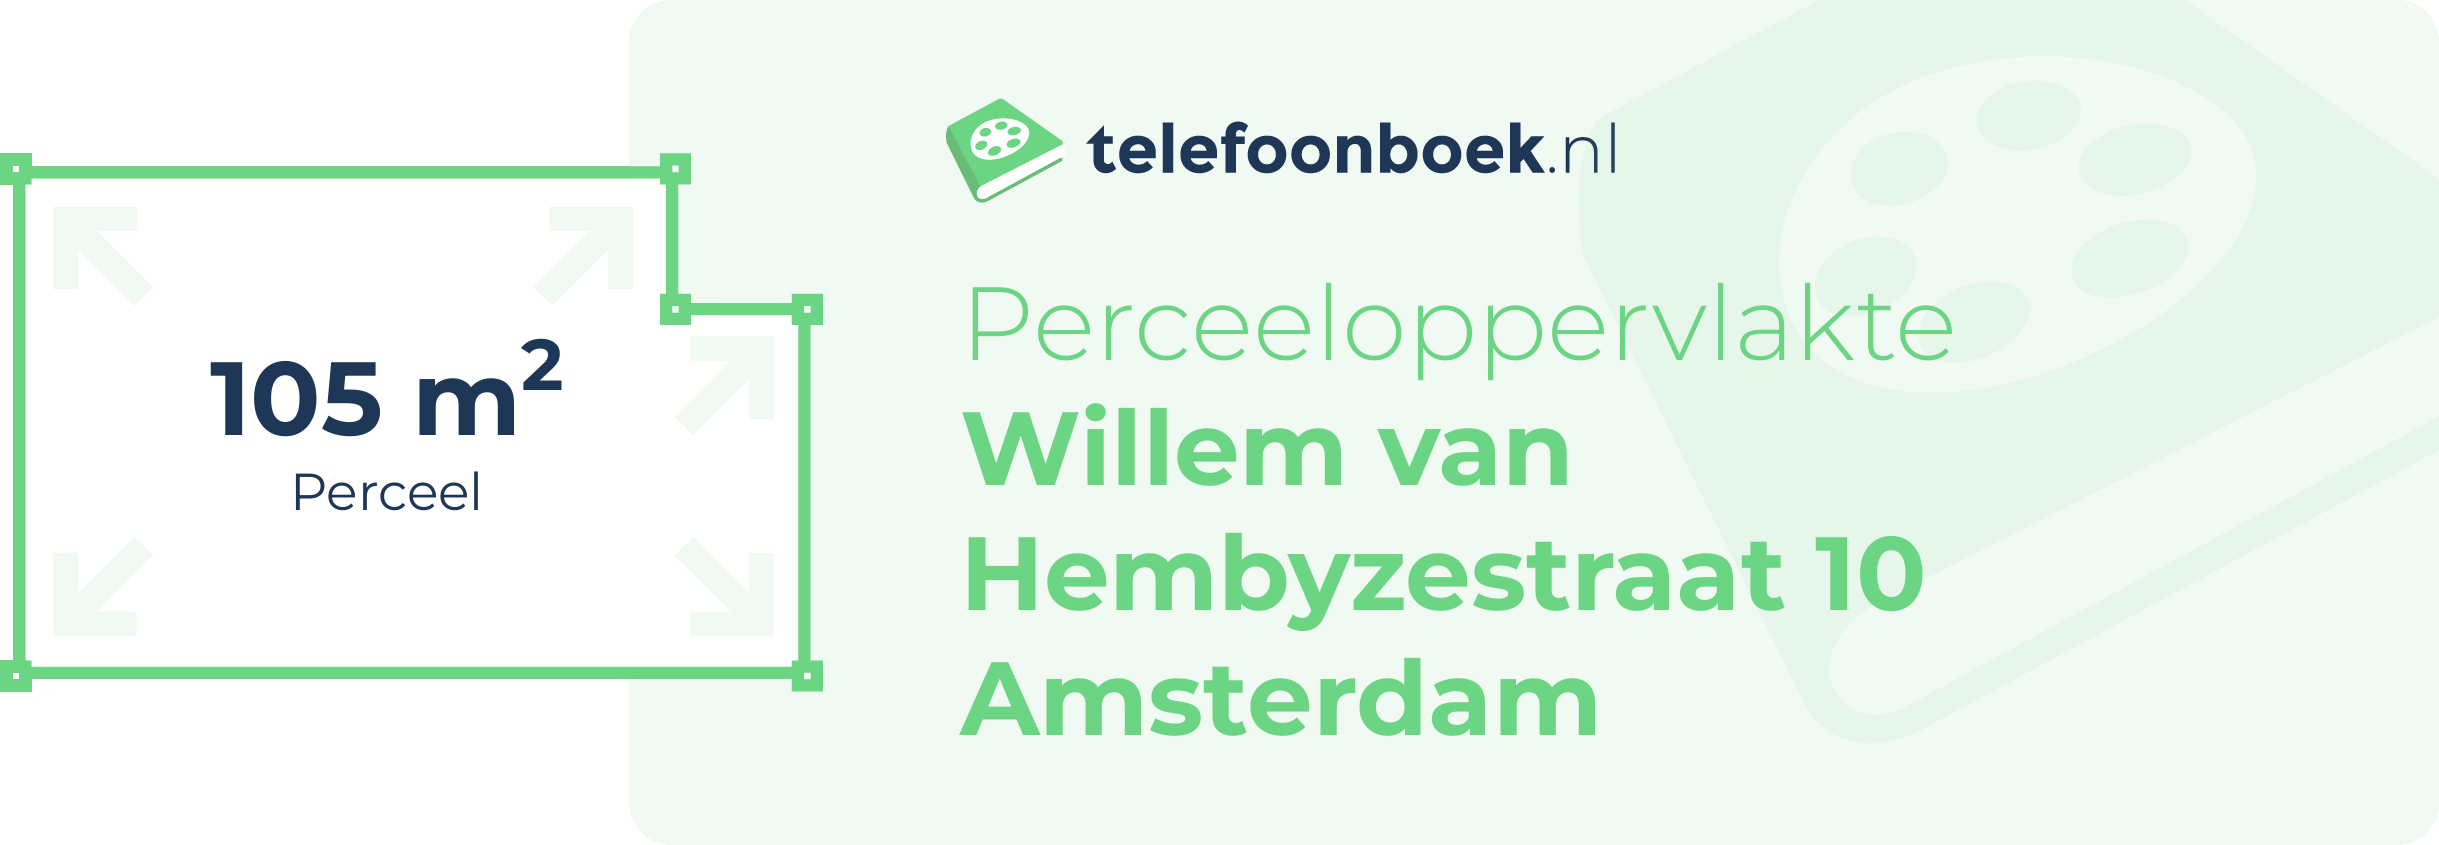 Perceeloppervlakte Willem Van Hembyzestraat 10 Amsterdam